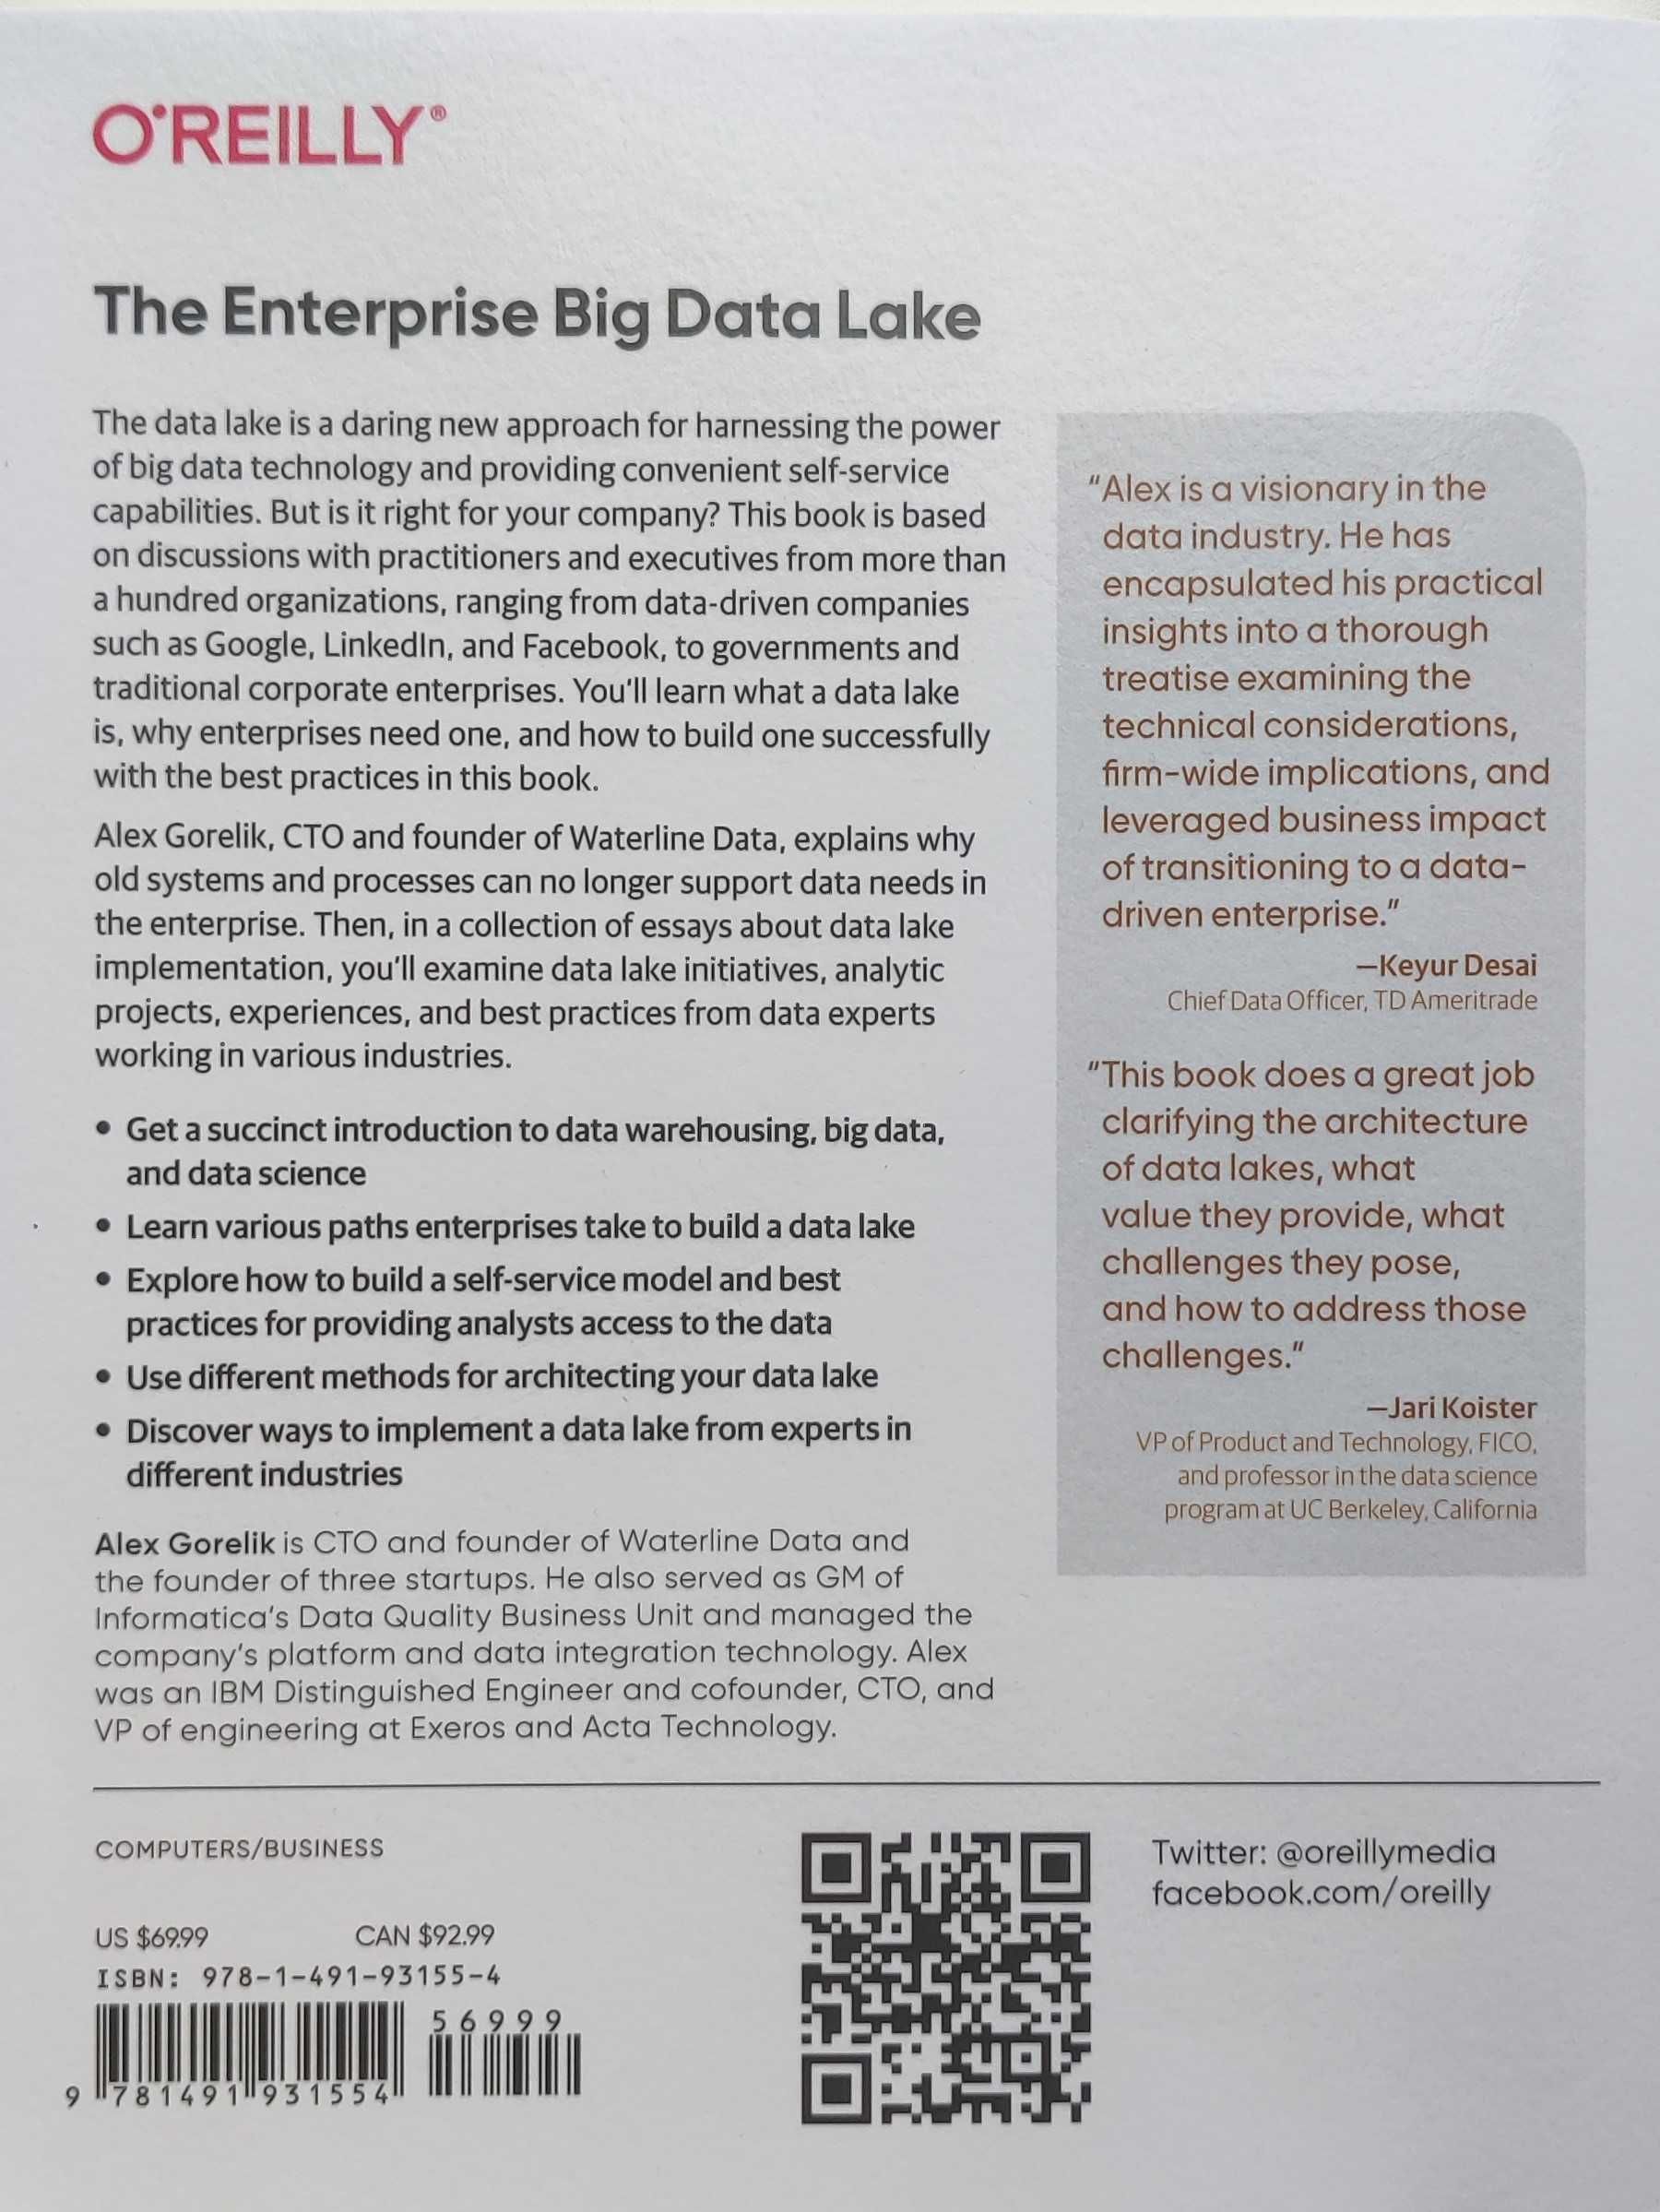 Książka "The Enterprise Big Data Lake"